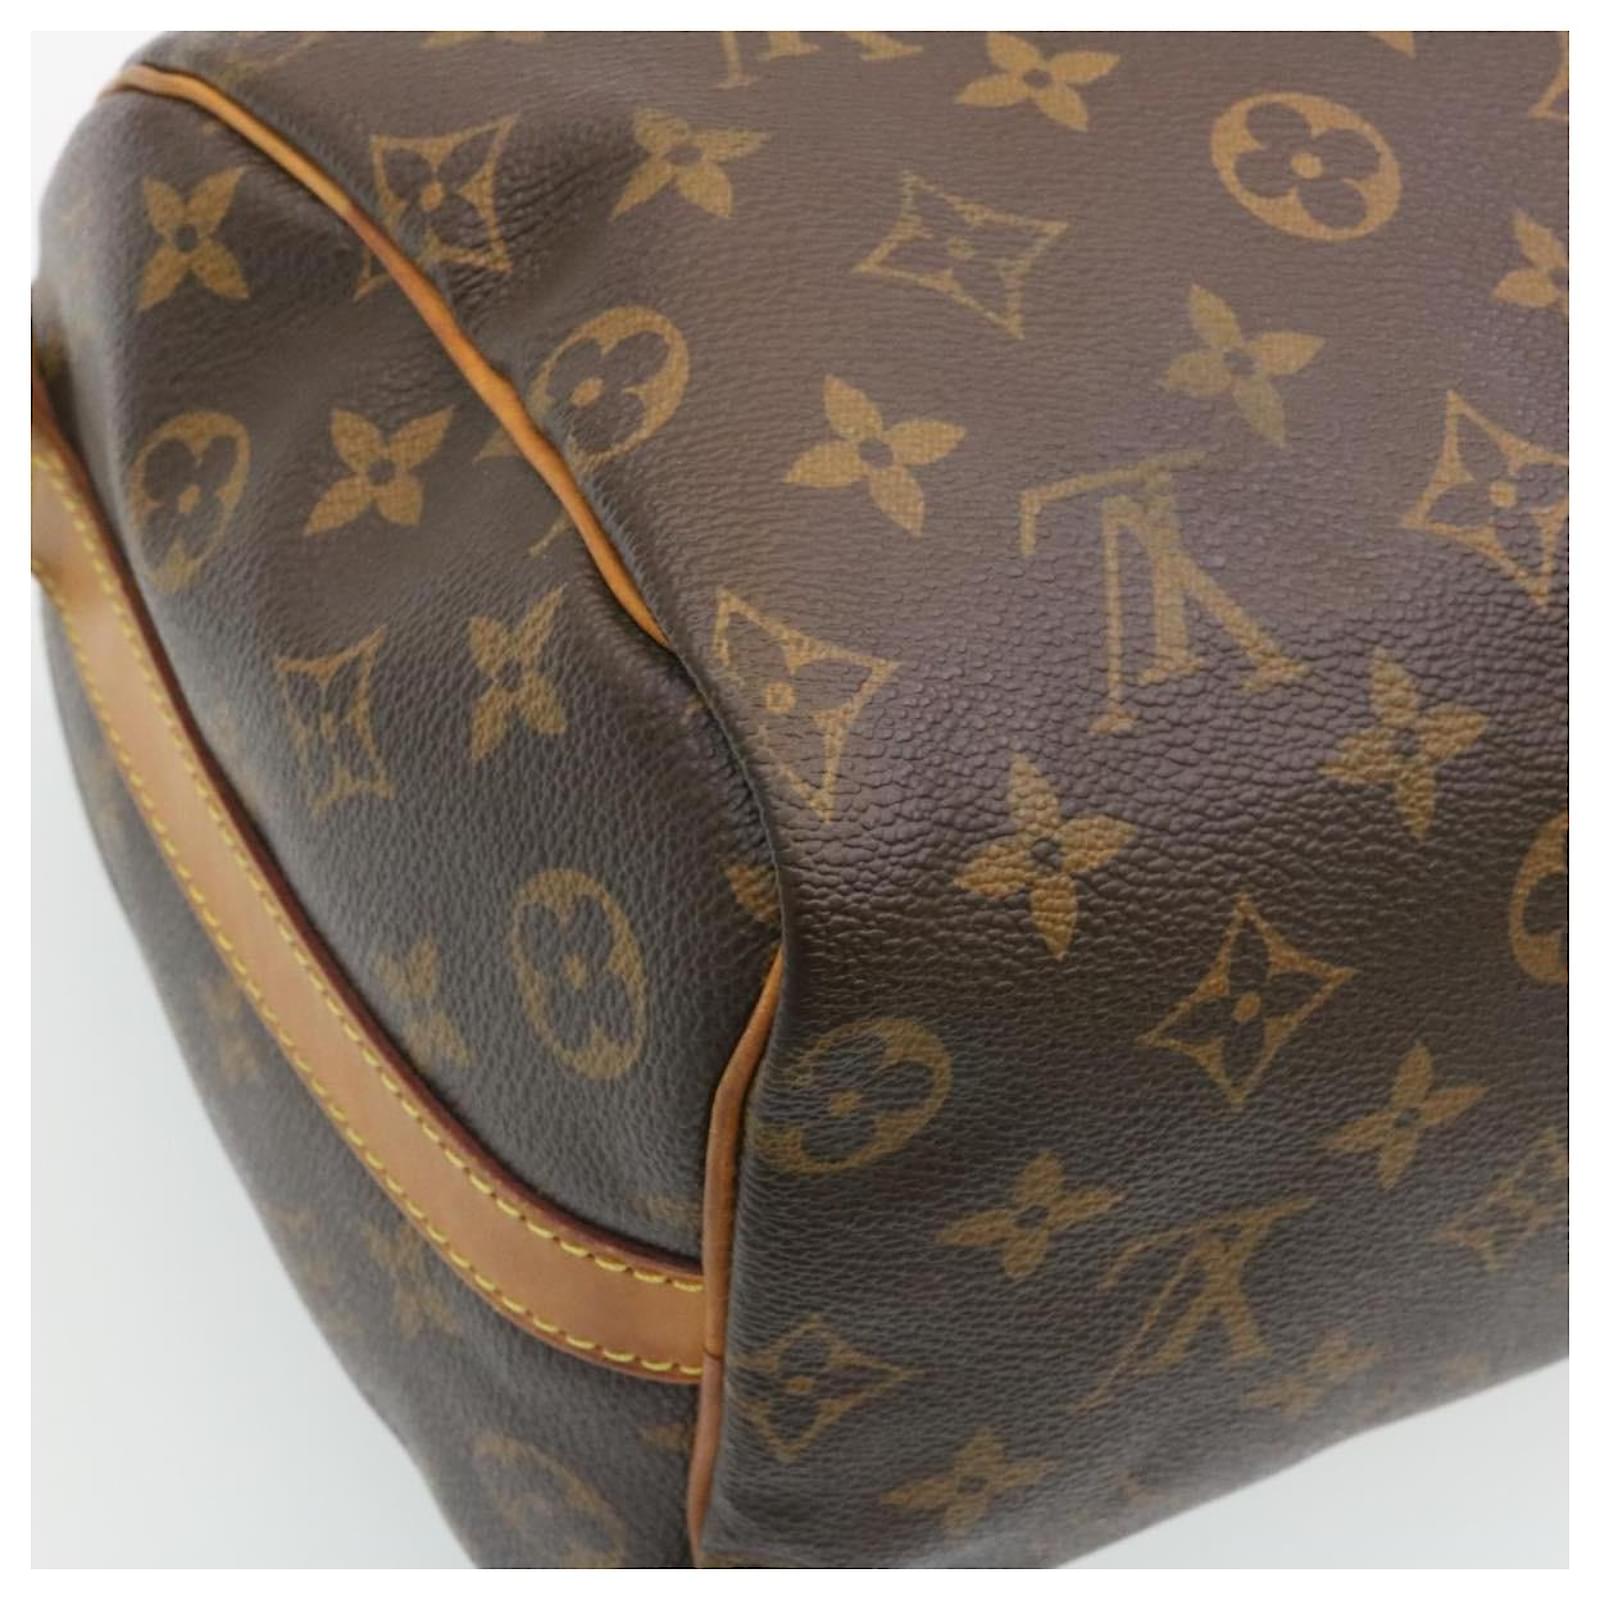 Shop Louis Vuitton MONOGRAM Monogram Street Style Leather Logo Clutches  (M82543) by RoyalBee